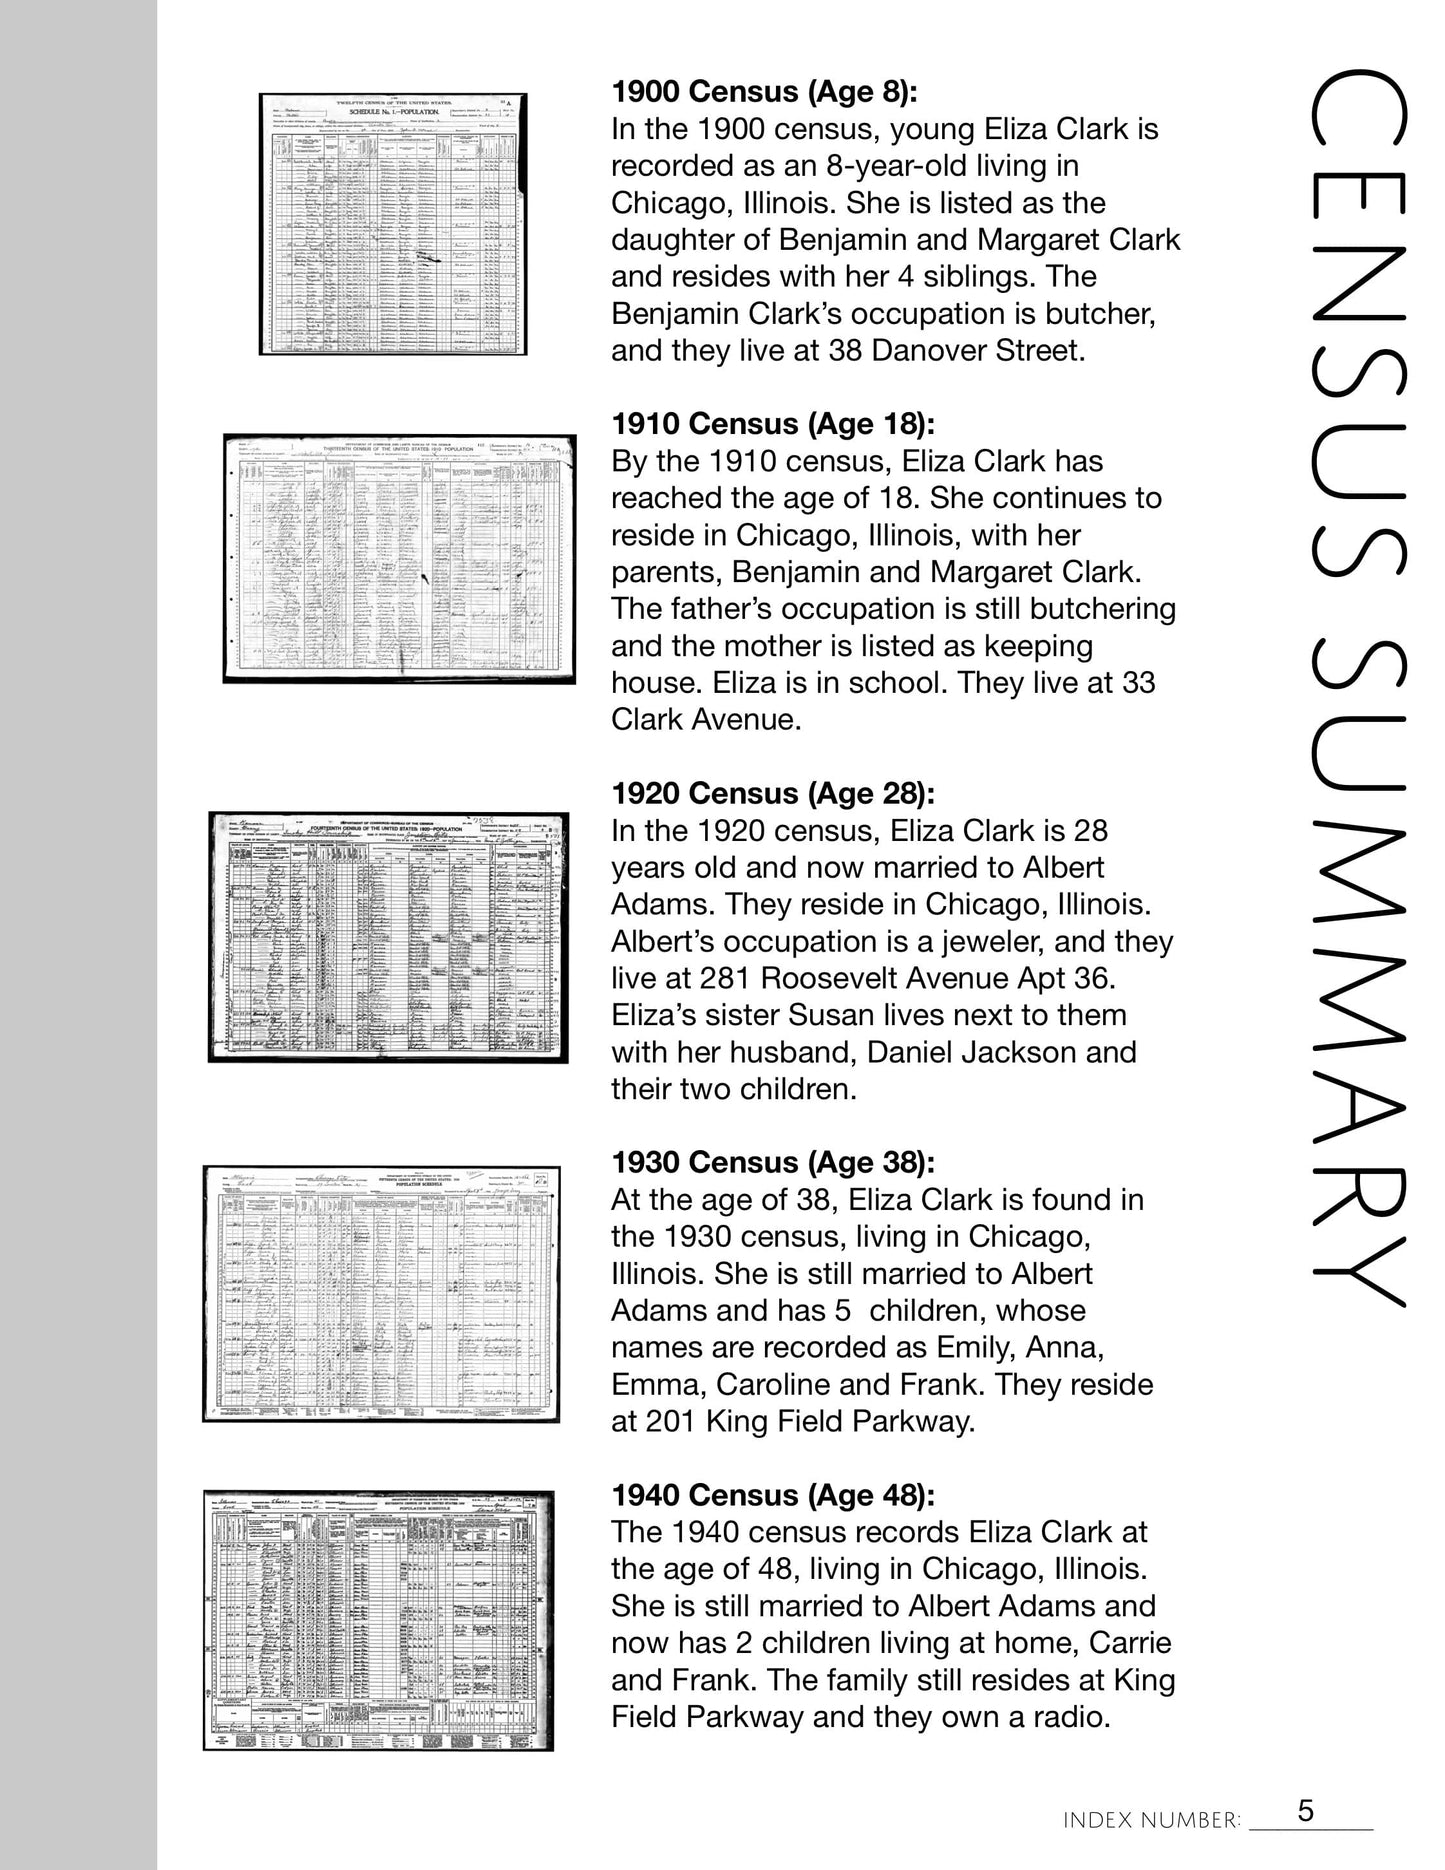 Census Summary: Printable Genealogy Form (Digital Download)